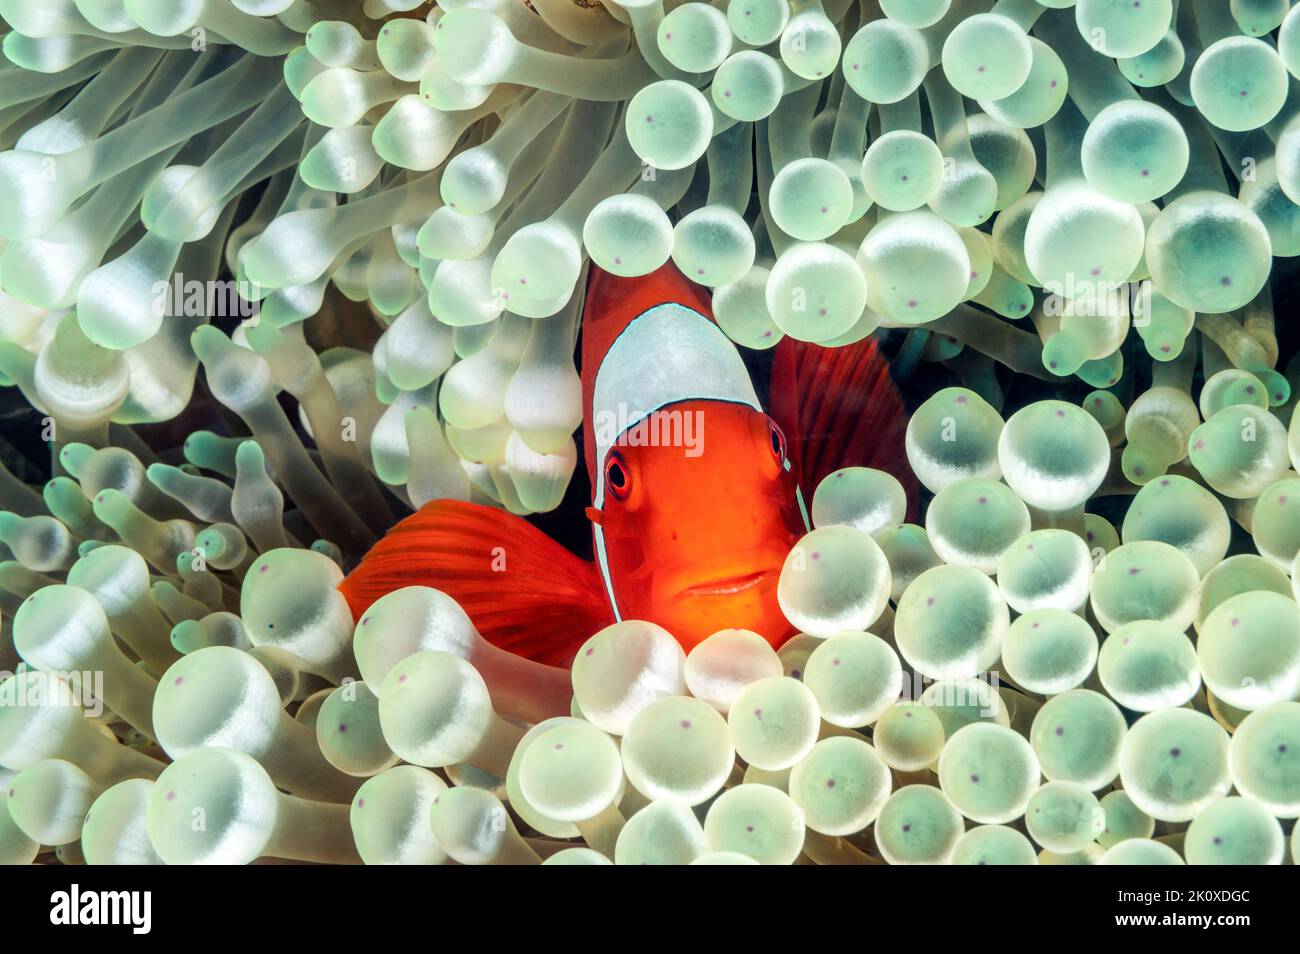 Spinecheek anemonefish, Premnas biaculeatus, in a bulb tentacle anemone, Entacmaea quadricolor, Raja Ampat Indonesia Stock Photo